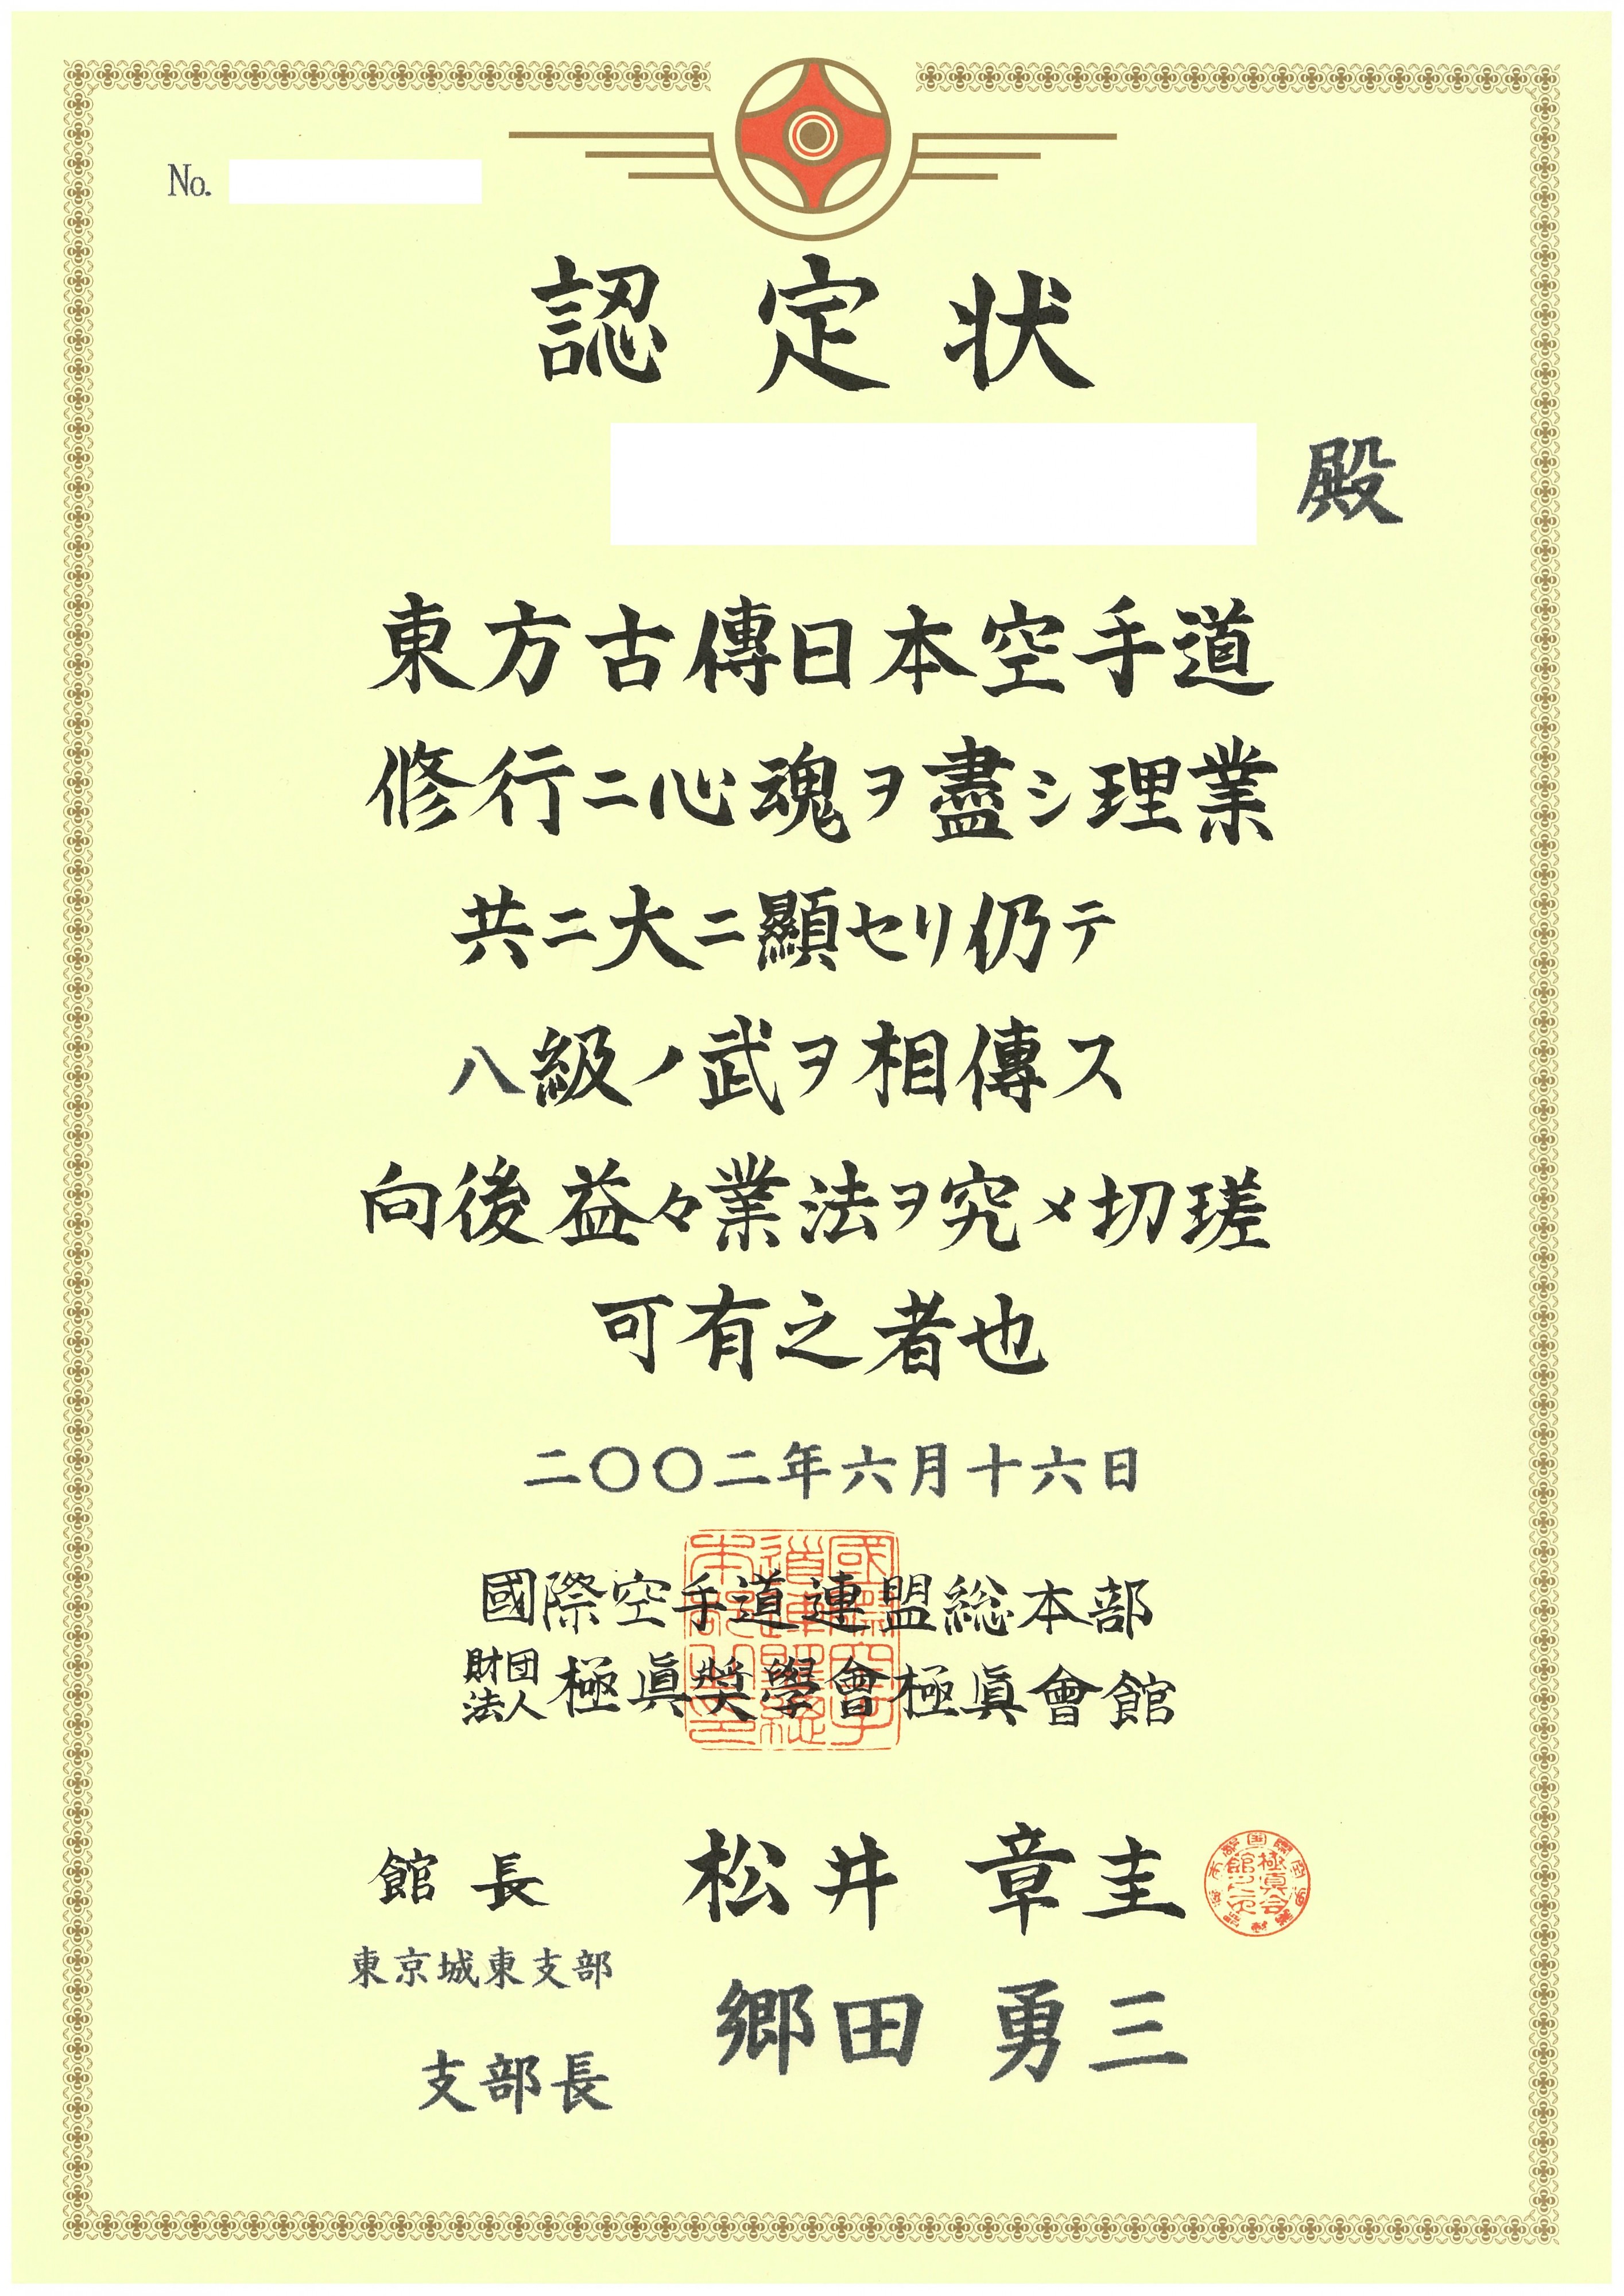 Diploma of 8th Kyu in Kyokushin Karate